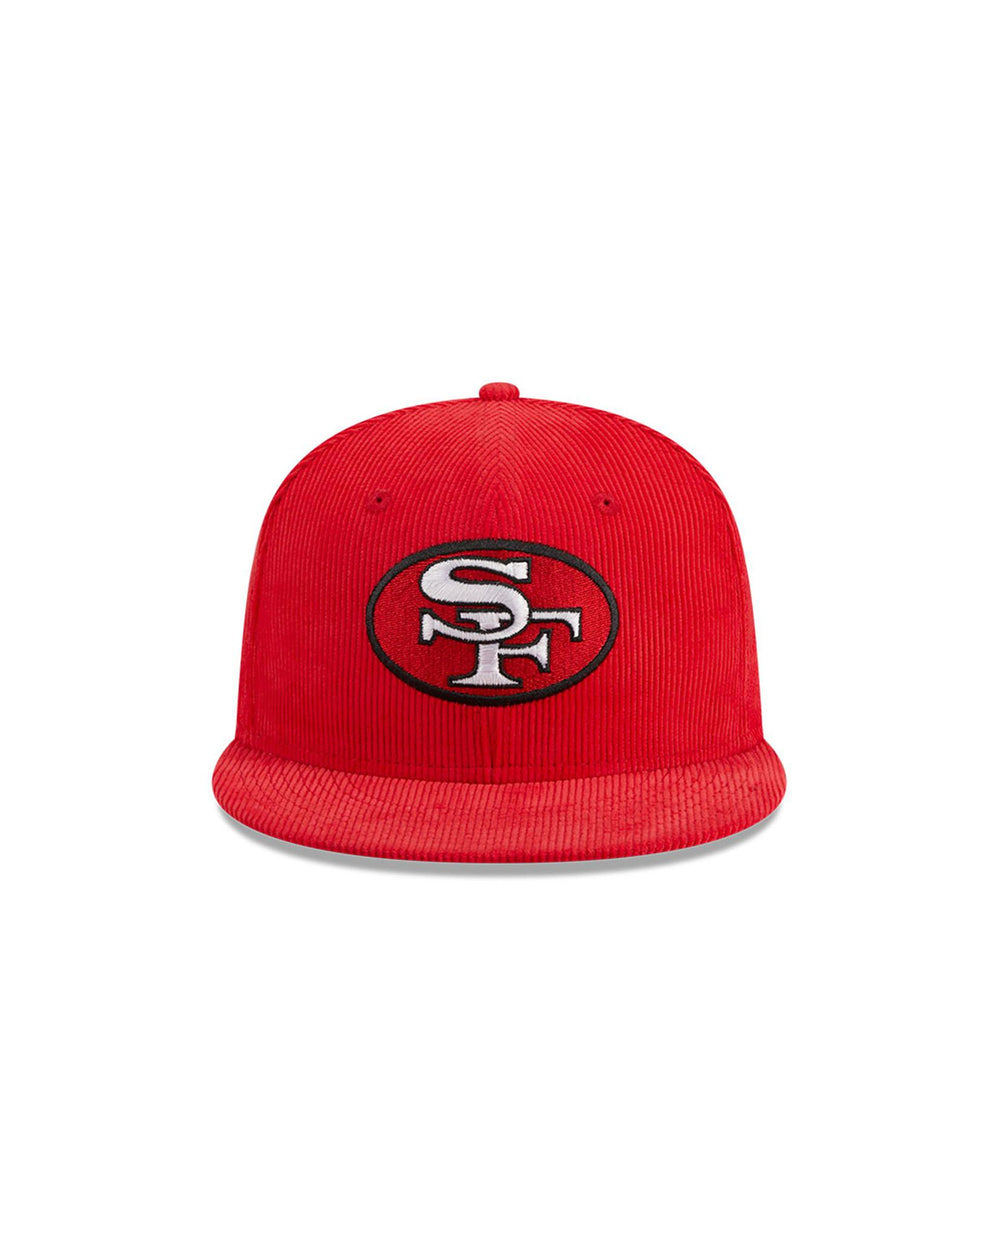 san francisco 49ers new era hat